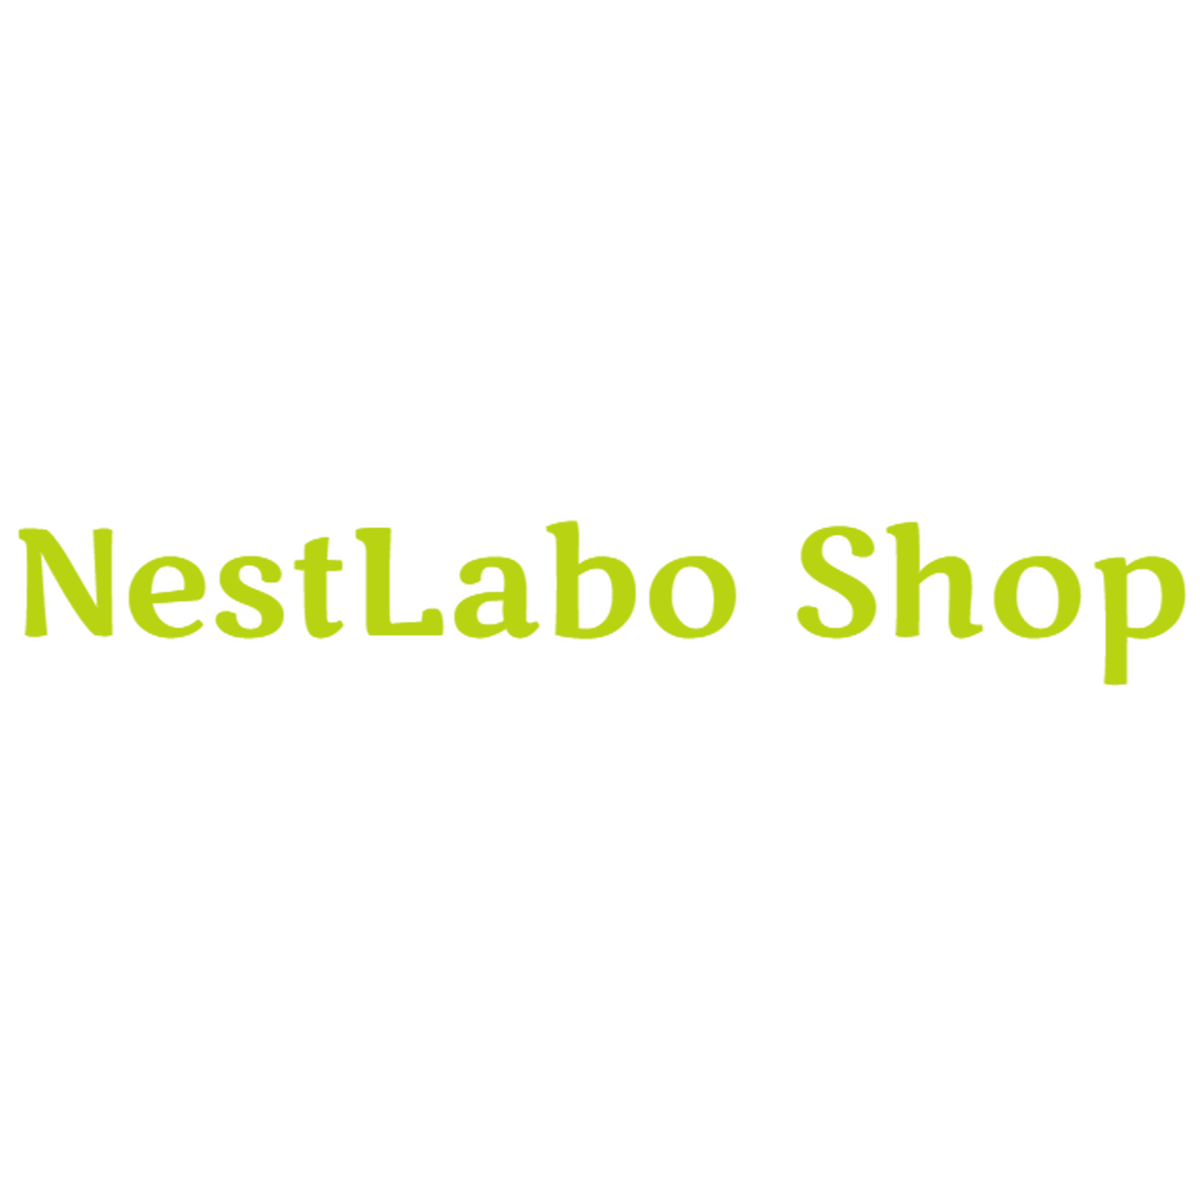 Nestlabo Shop